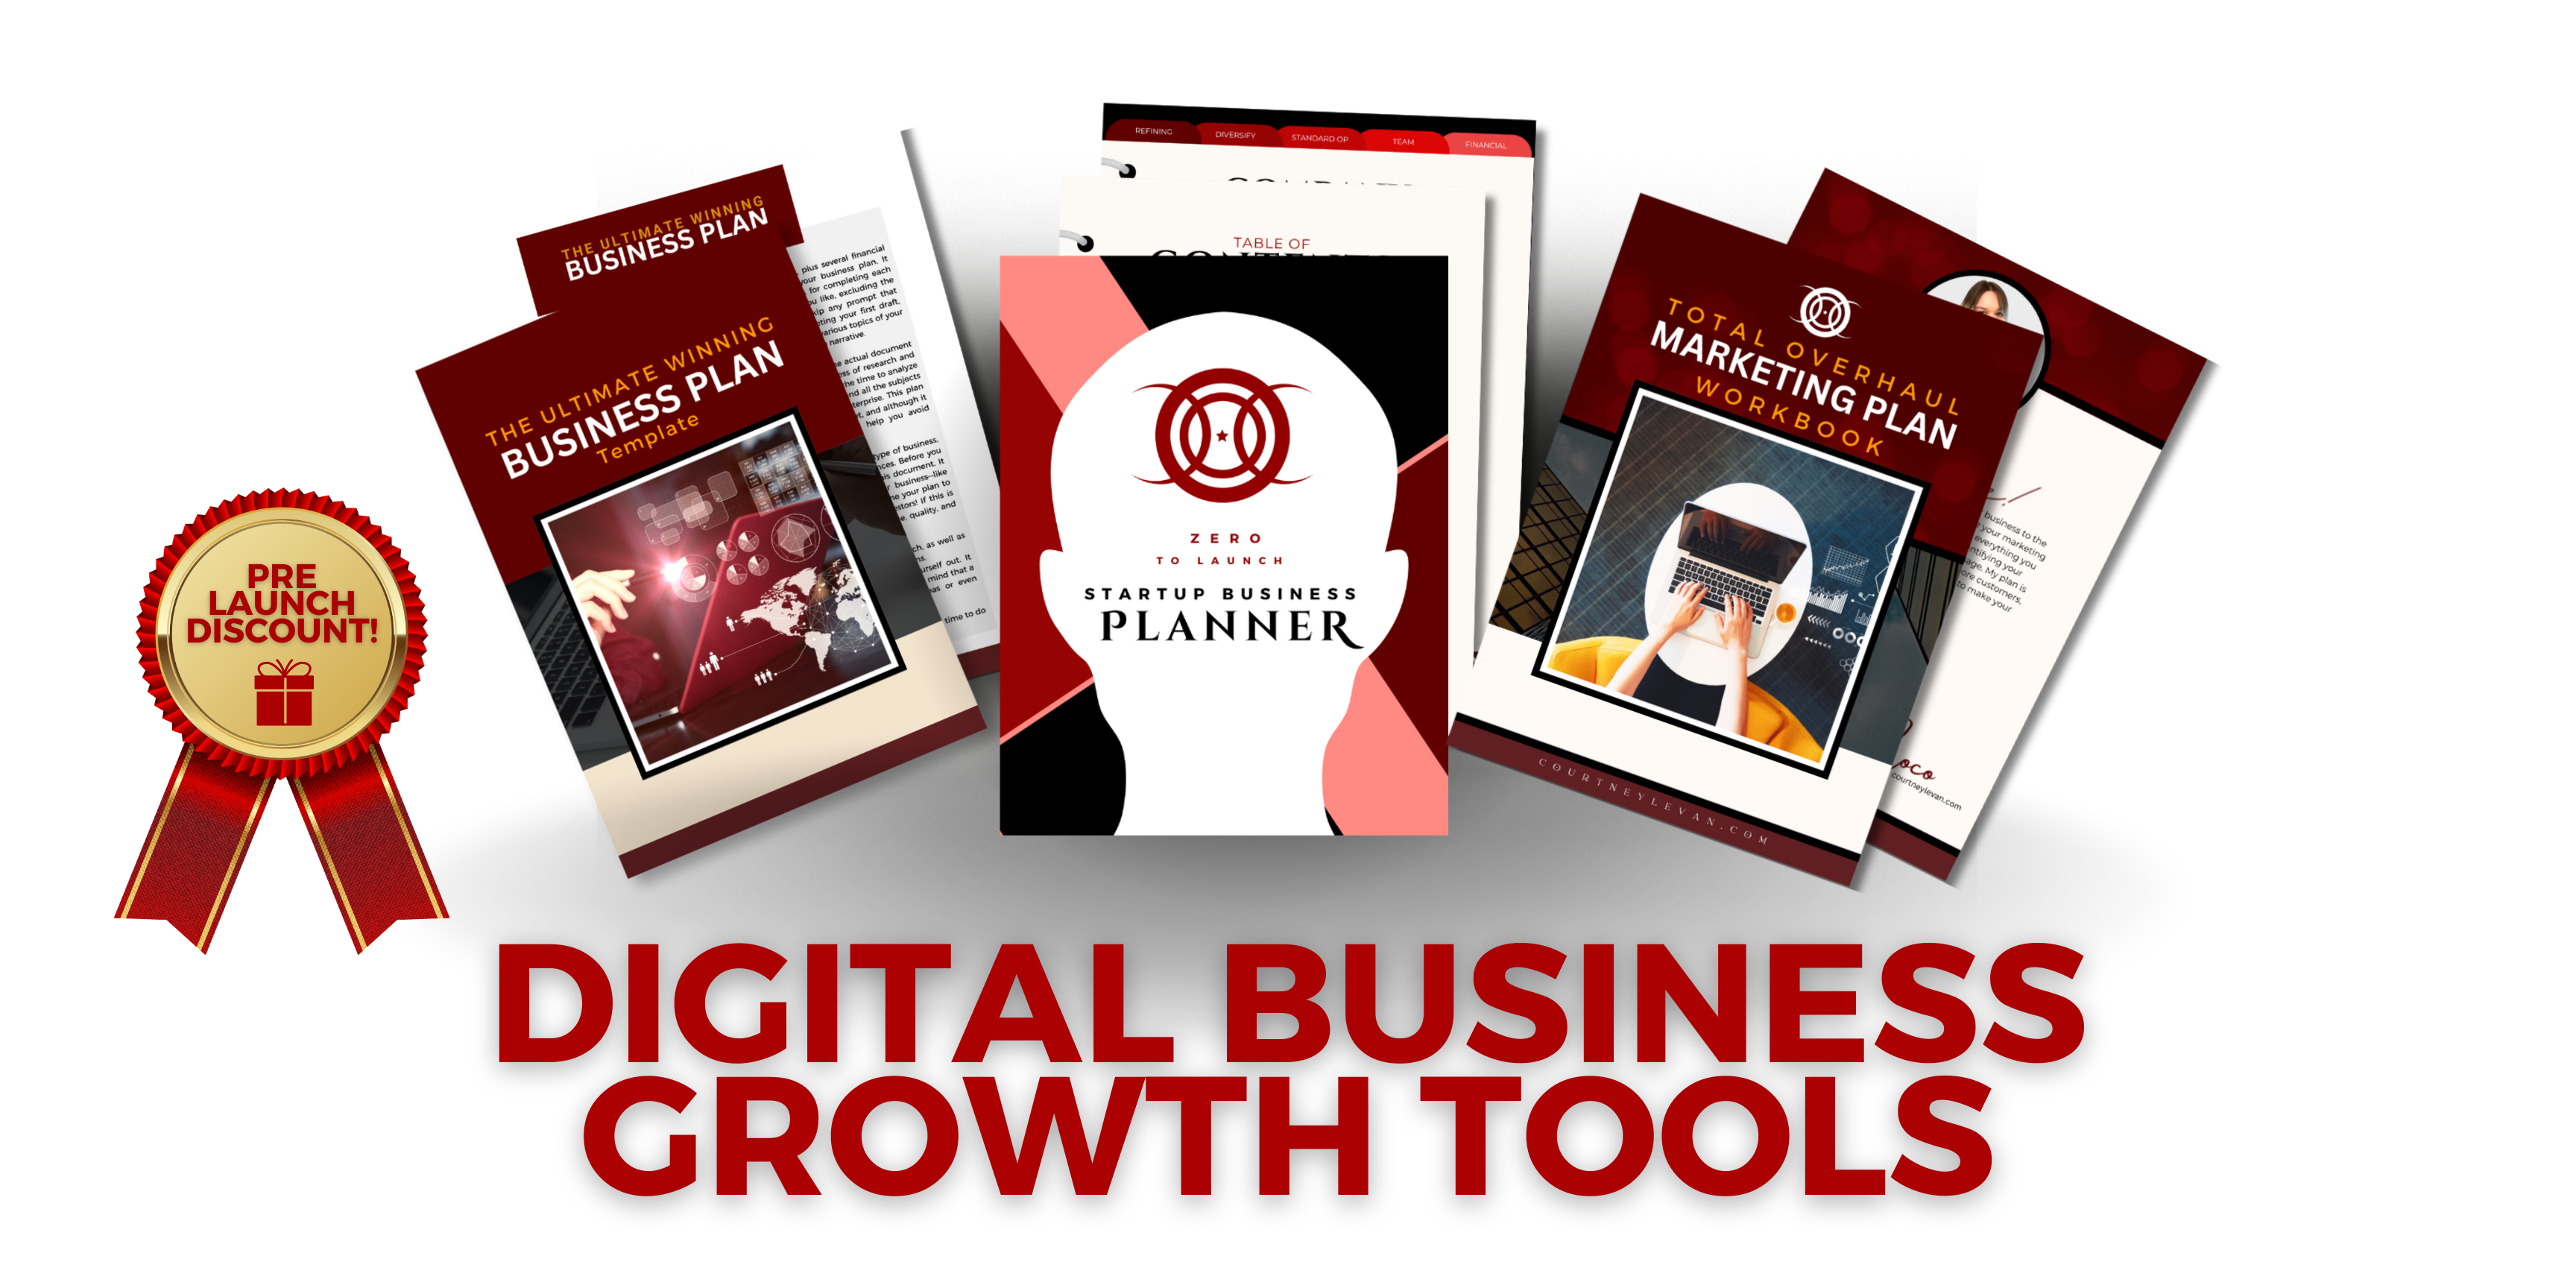 Digital business growth tools bundles